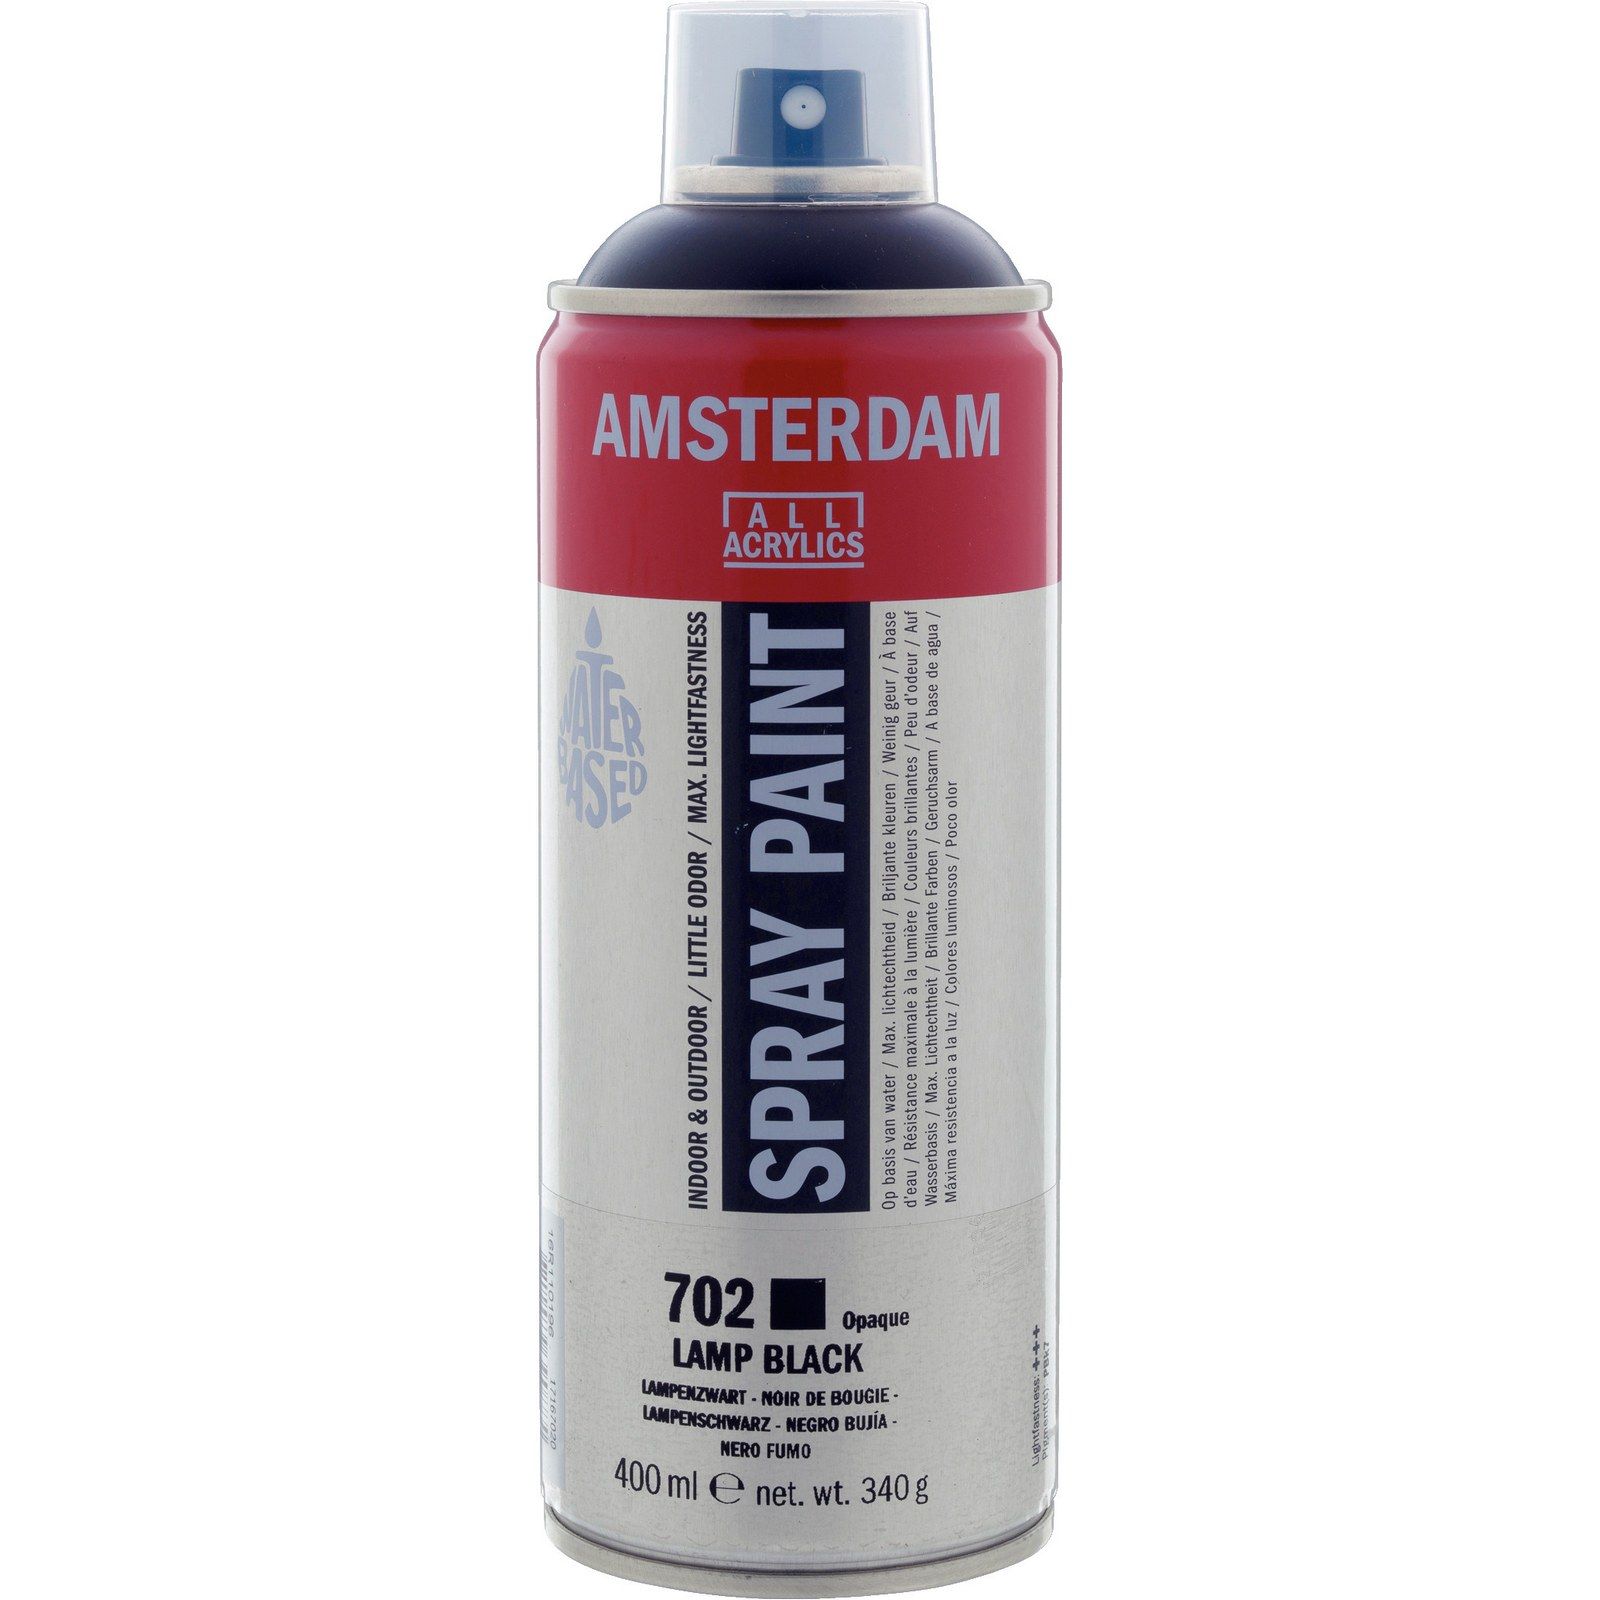 Amsterdam • Spray Paint Lamp Black 702 400ml